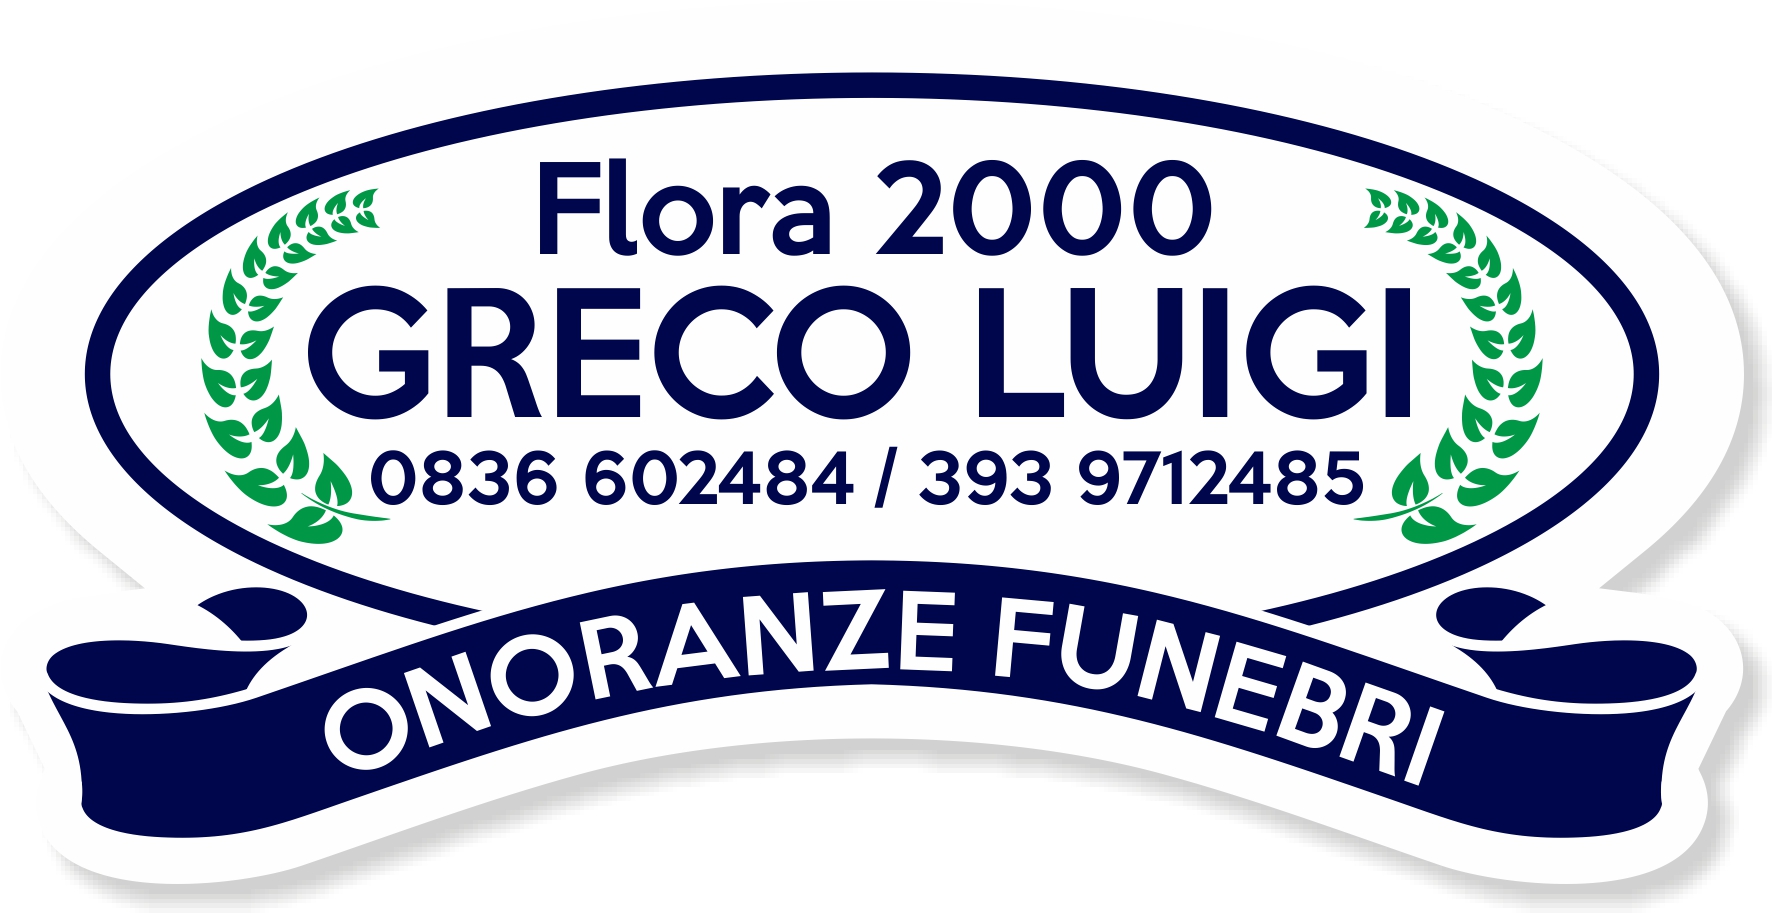 Onoranze Funebri Flora 2000